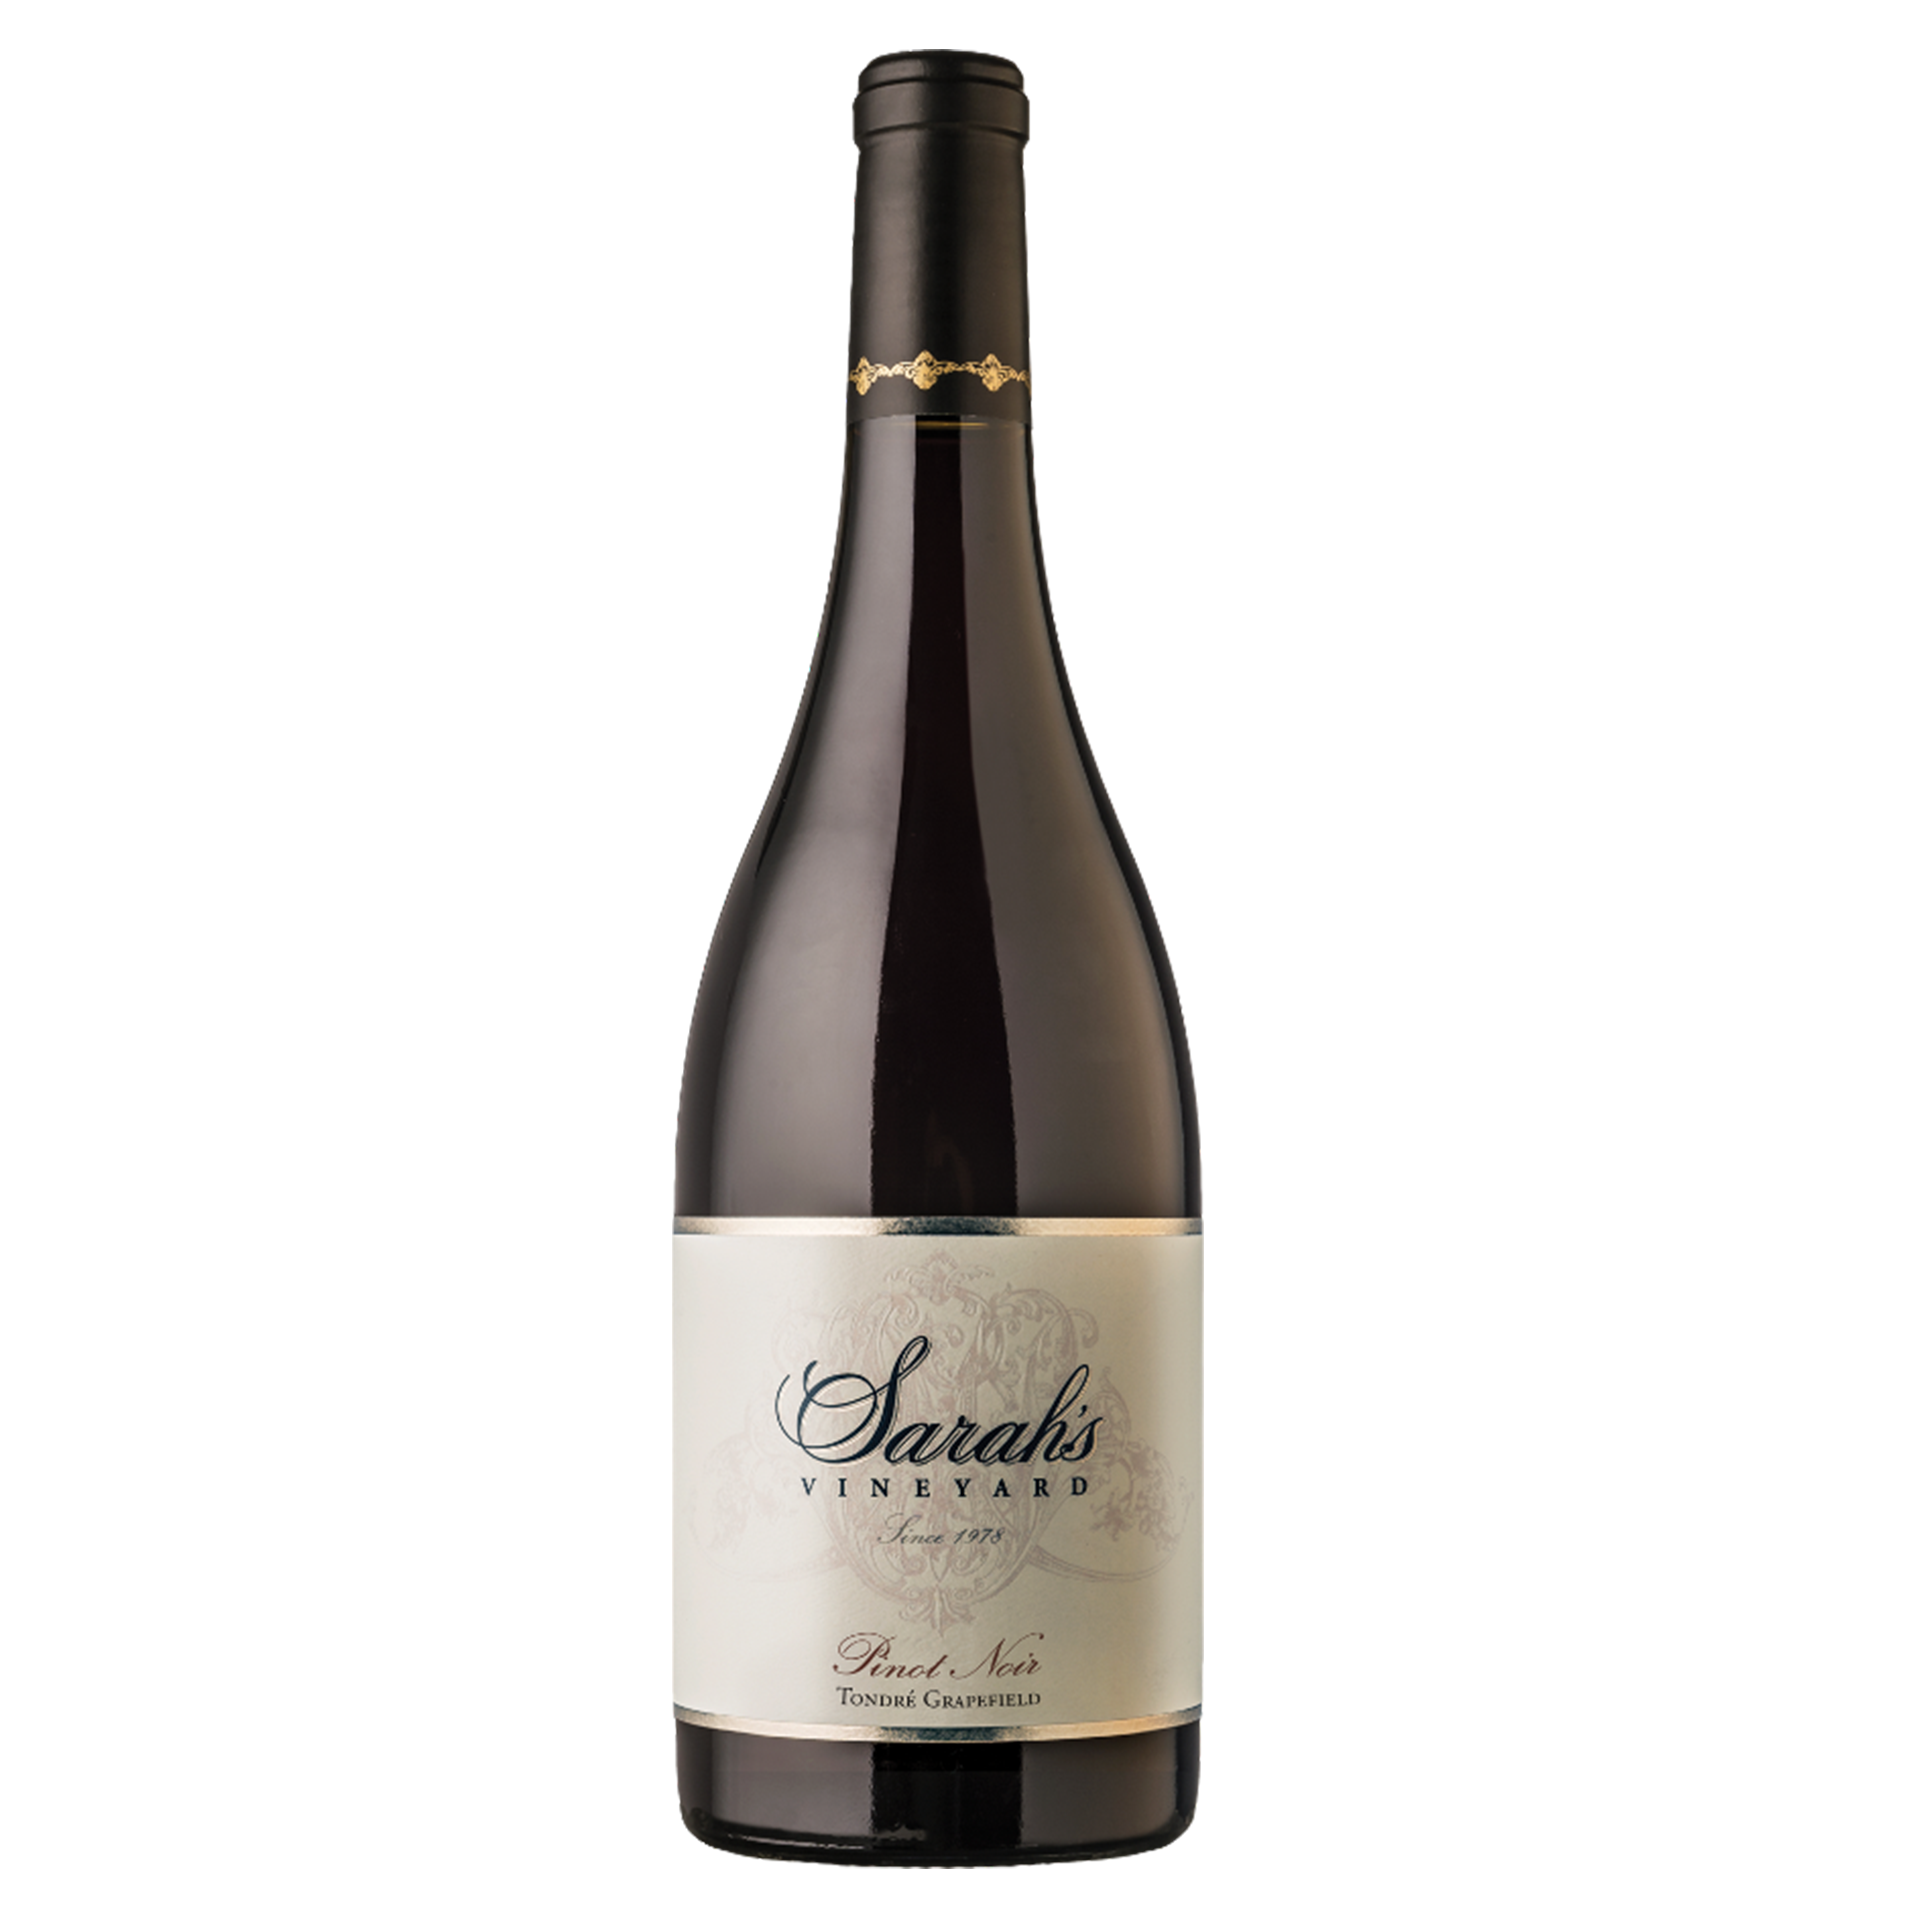 Sarah’s vineyard 2018 Pinot Noir Tondre Grapefield